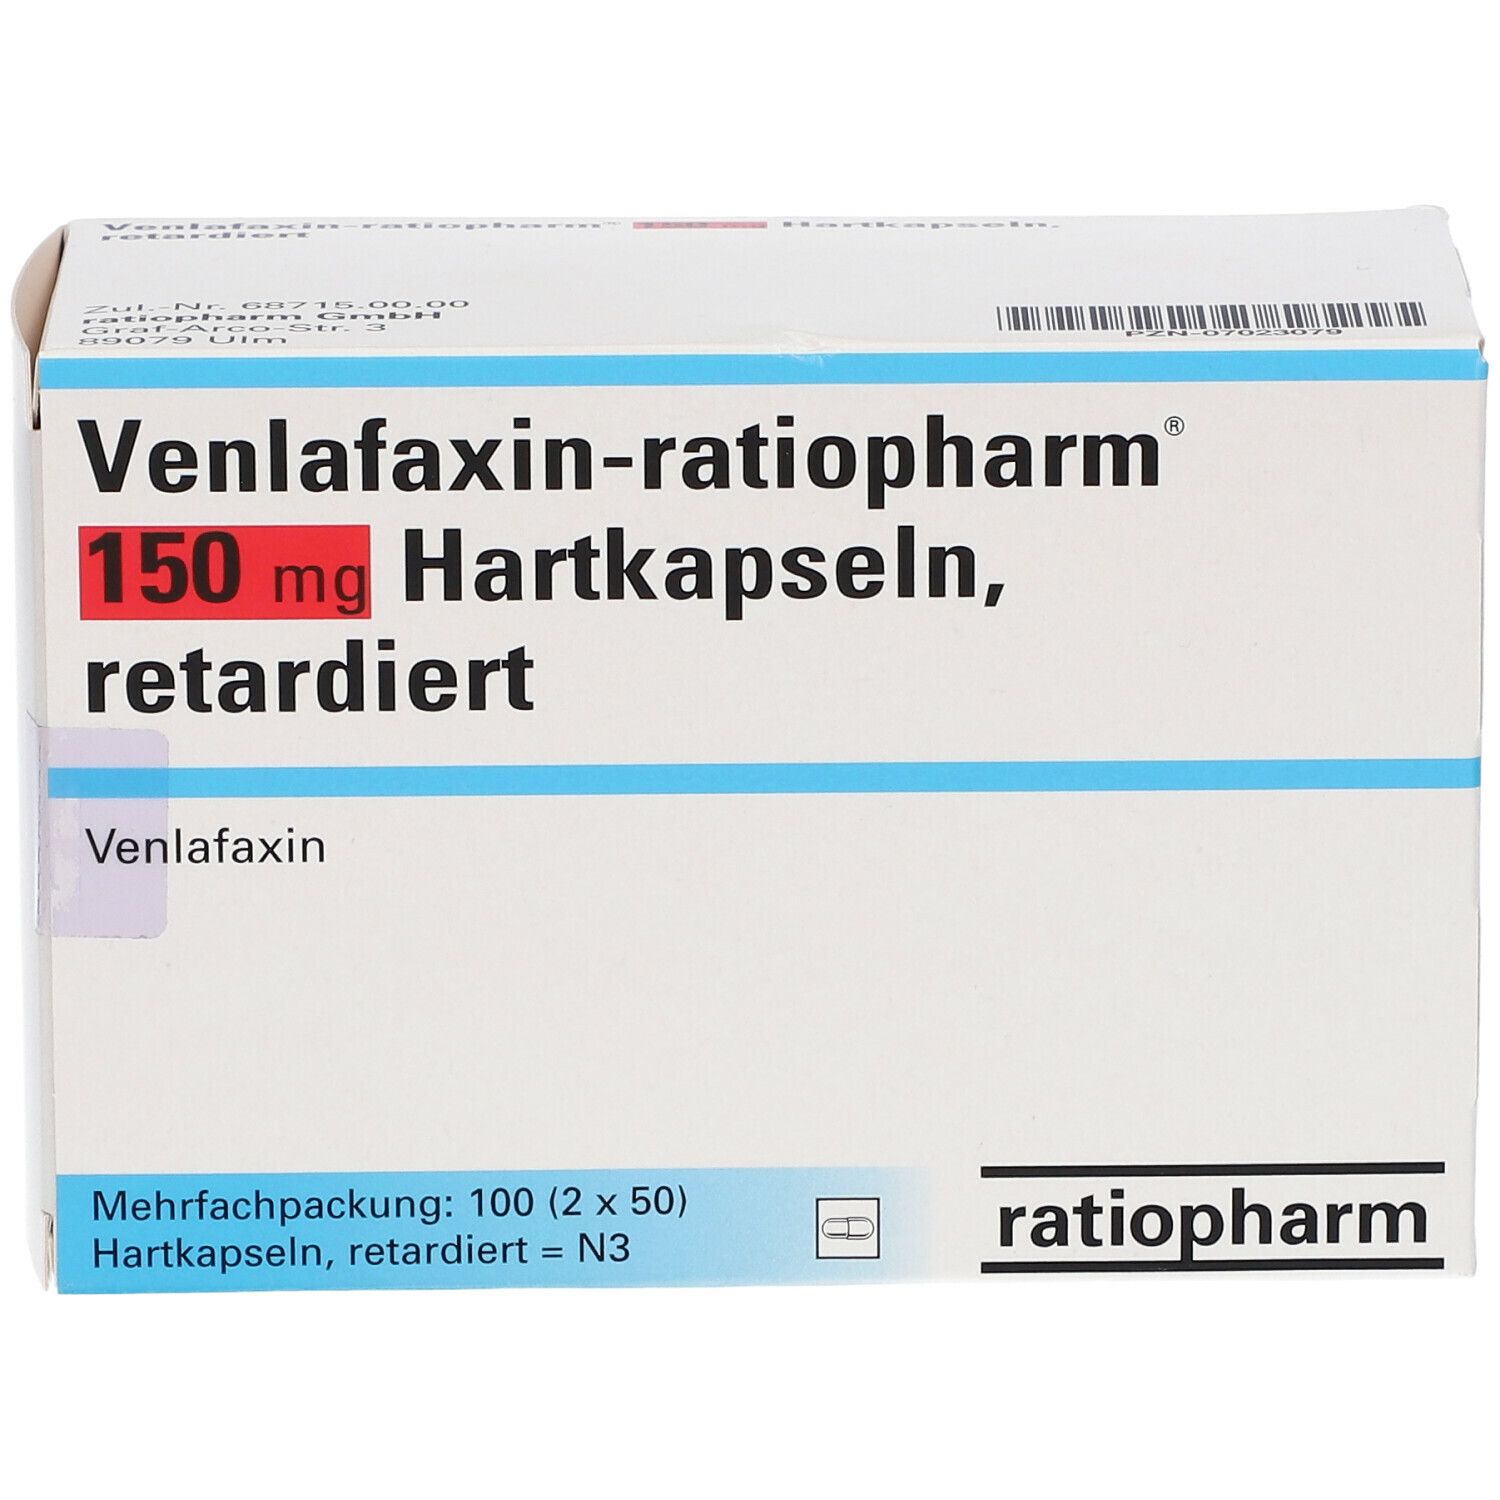 Venlafaxin-ratiopharm® 150 mg